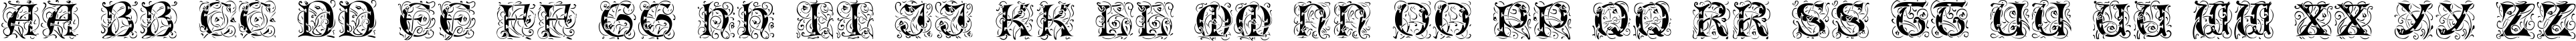 Пример написания английского алфавита шрифтом Romantik